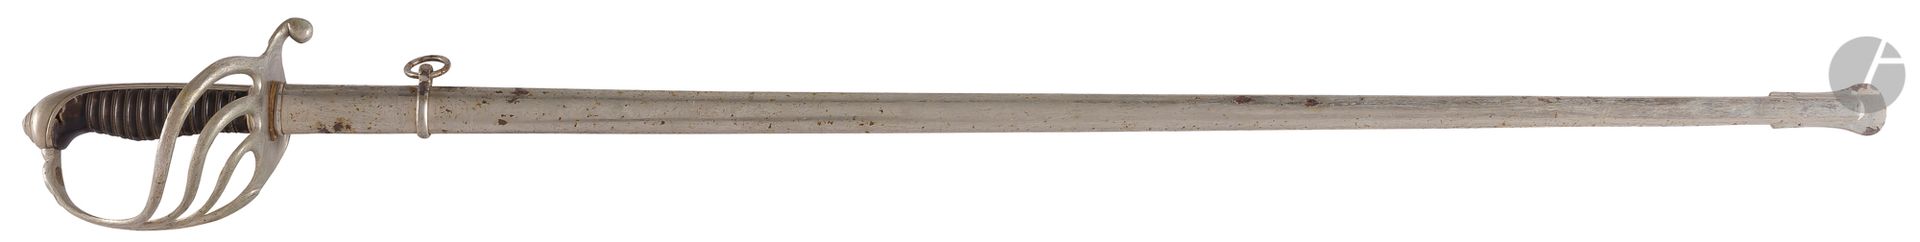 Null Infantry officer saber model 1882
. Horn handle with filigree. Nickel-plate&hellip;